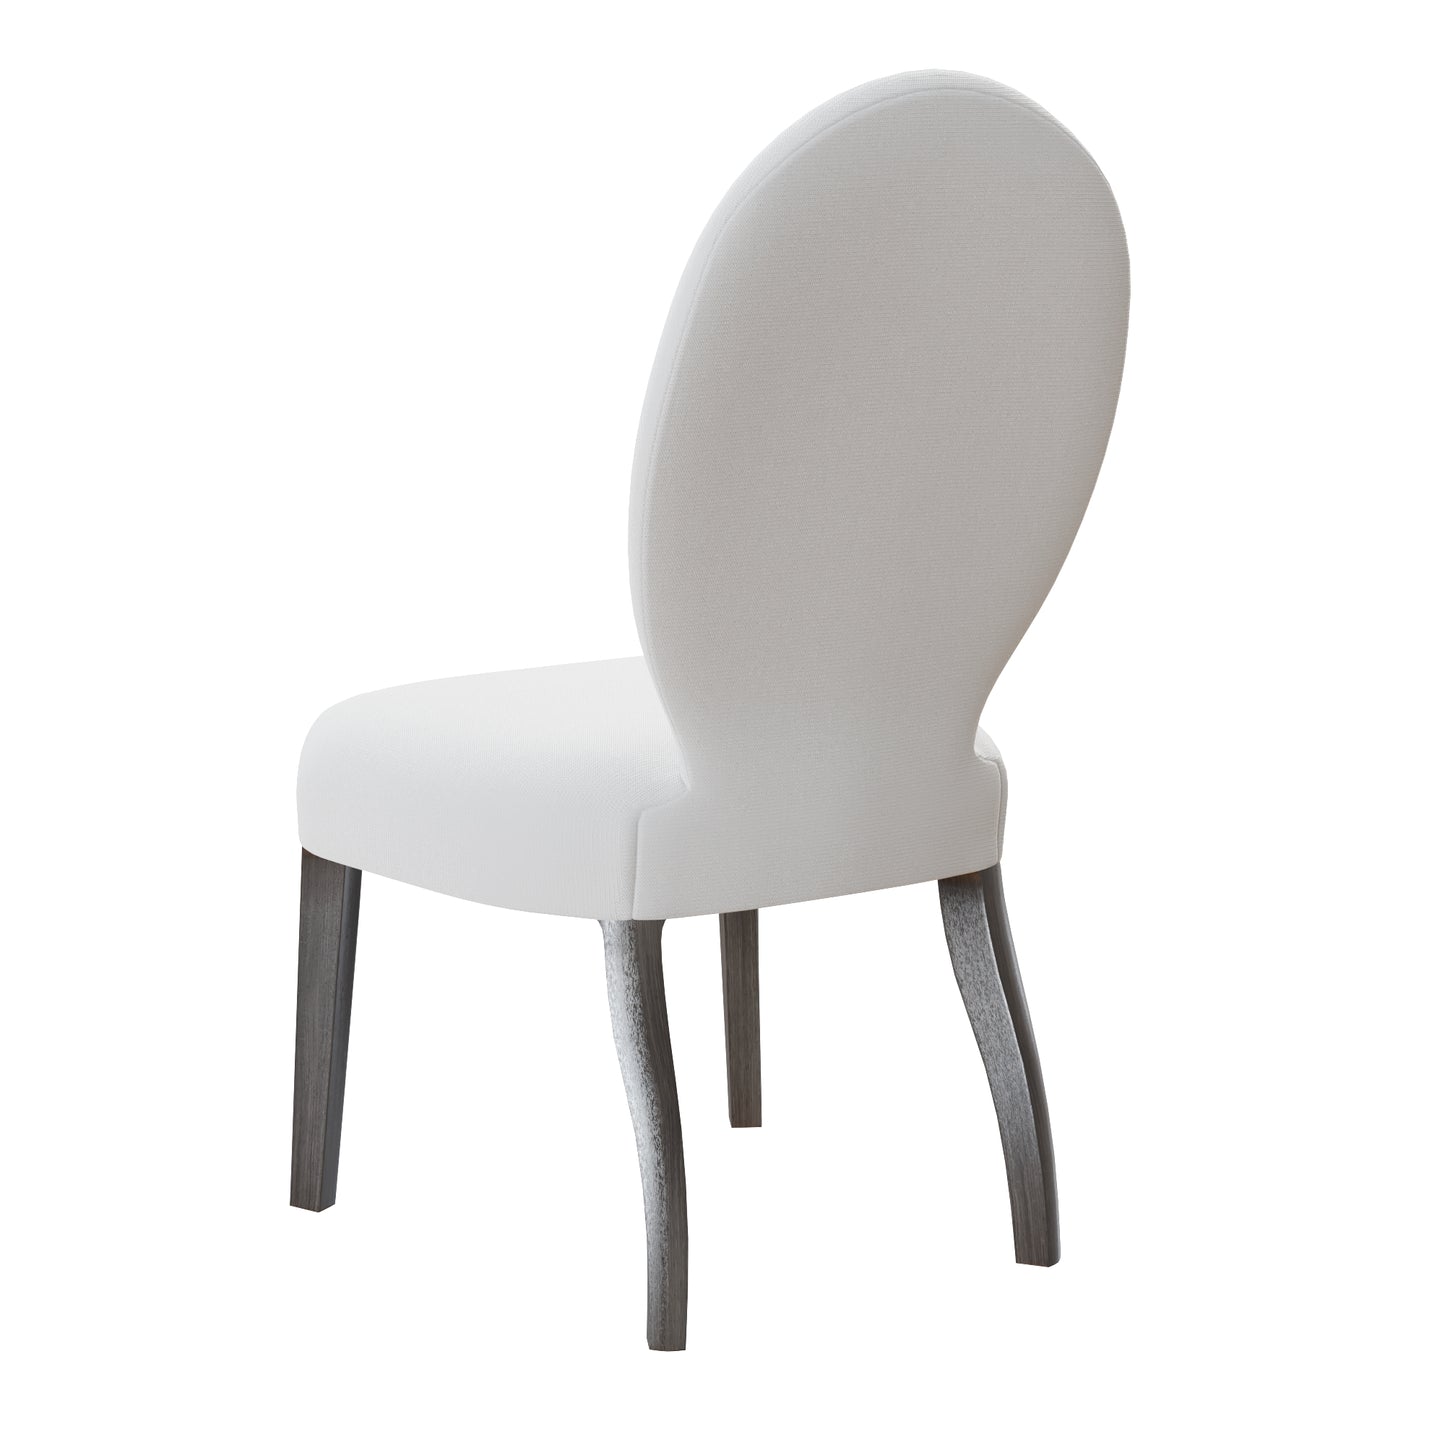    Liz-Chair-by-IMAESTRI-Back-3DModel-by-Krievostore